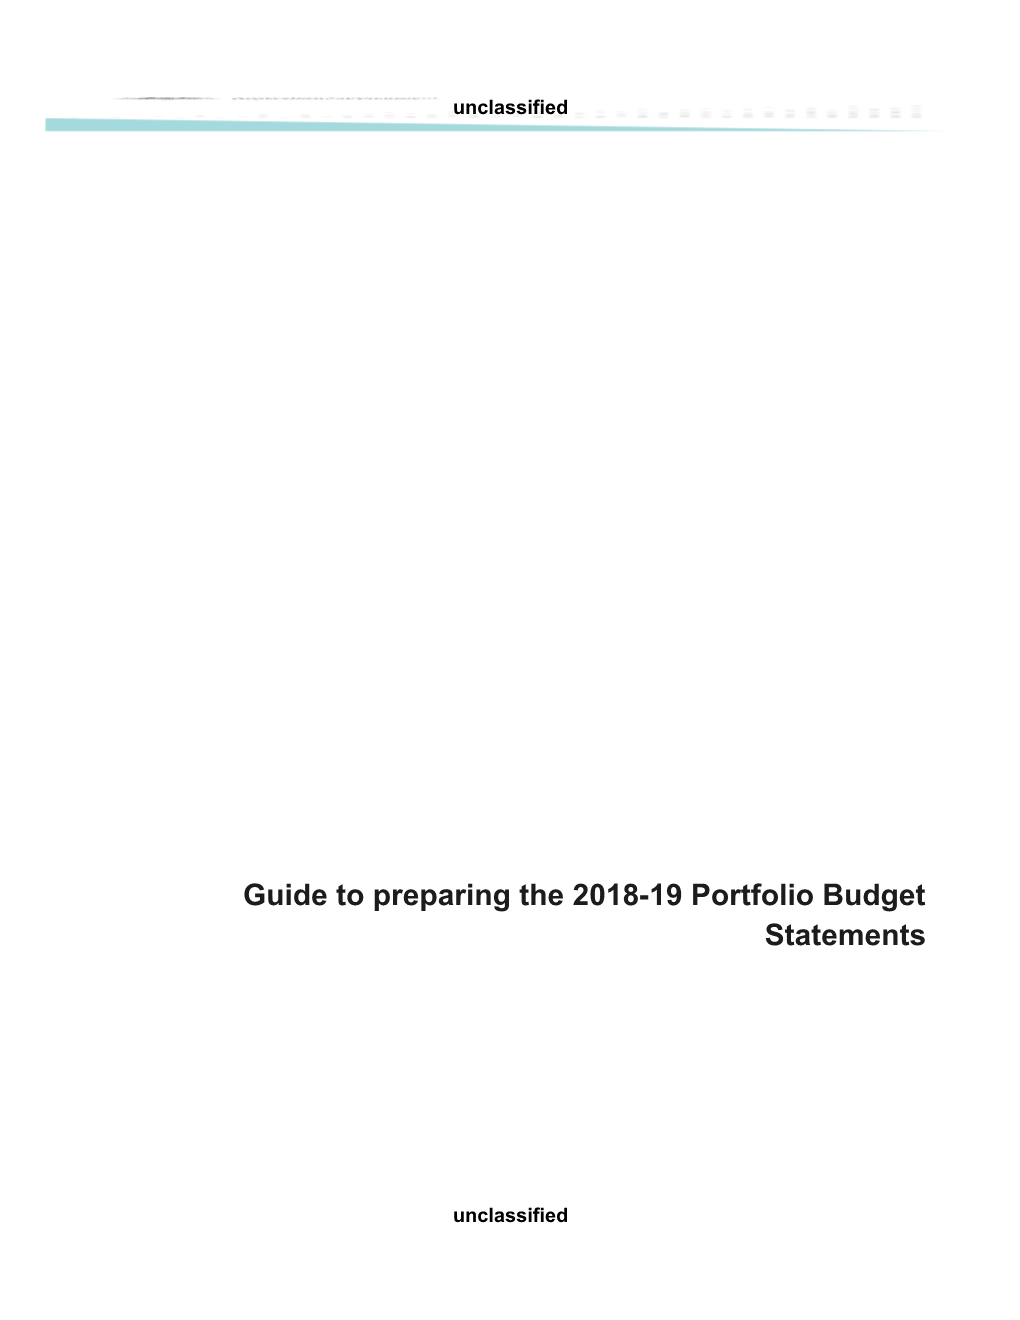 Guide to Preparing the 2018-19 Portfolio Budget Statements